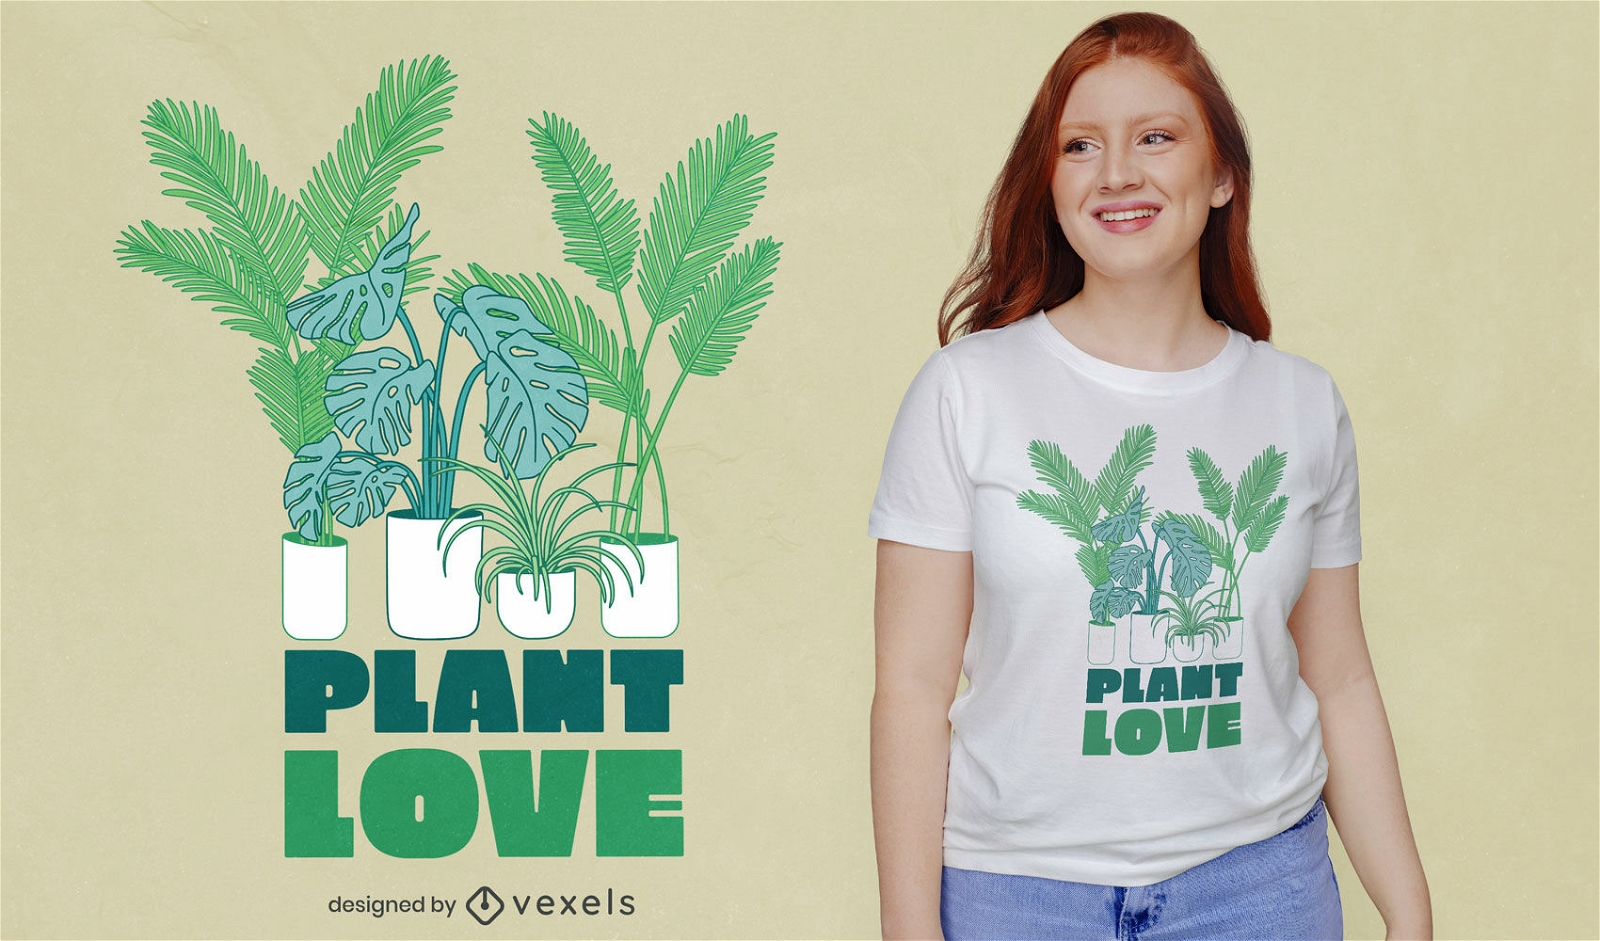 Plant love t-shirt design